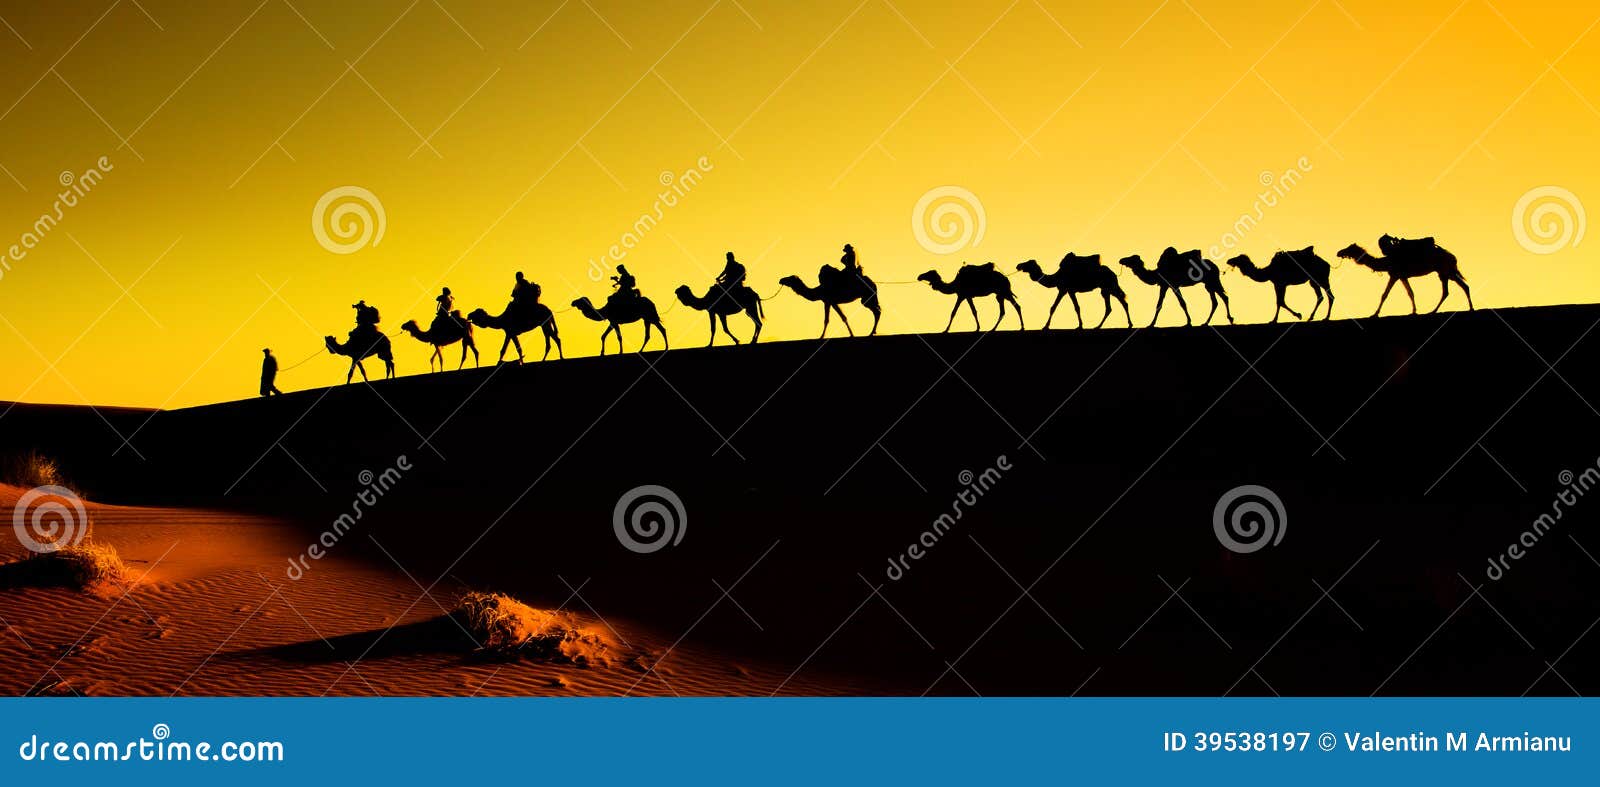 silhouette of a camel caravan